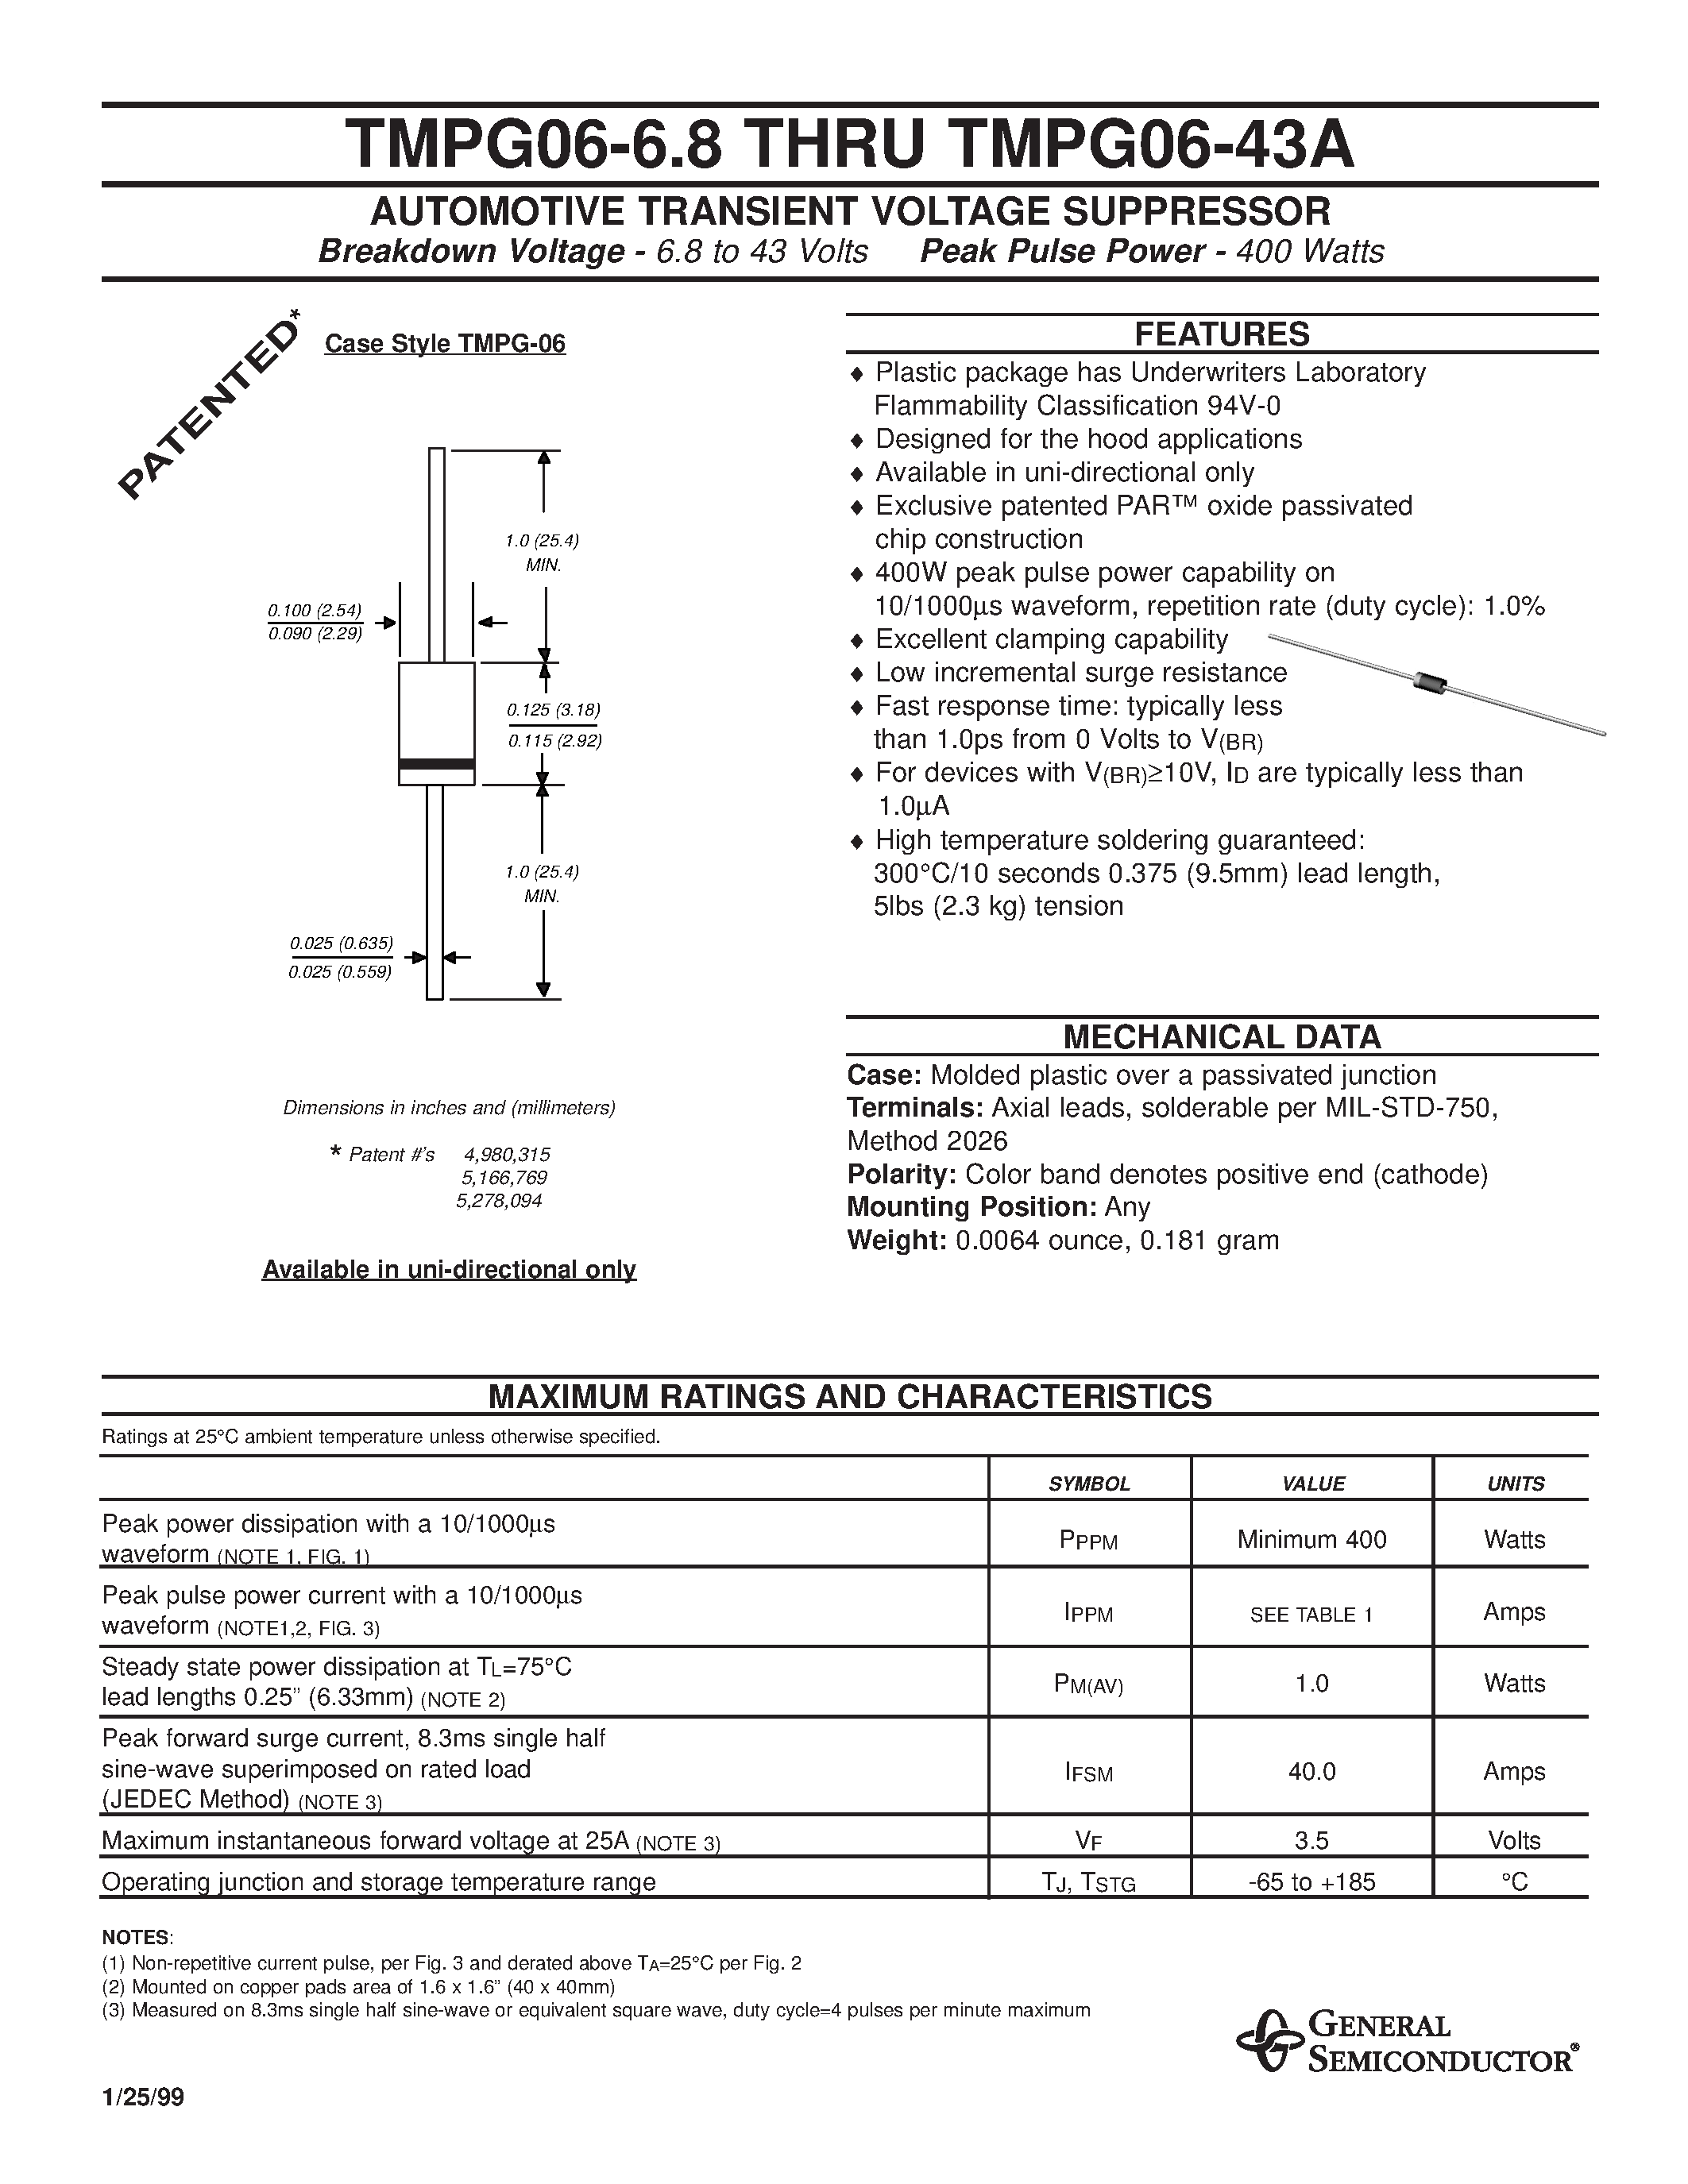 Datasheet TMPG06-6.8A - AUTOMOTIVE TRANSIENT VOLTAGE SUPPRESSOR page 1